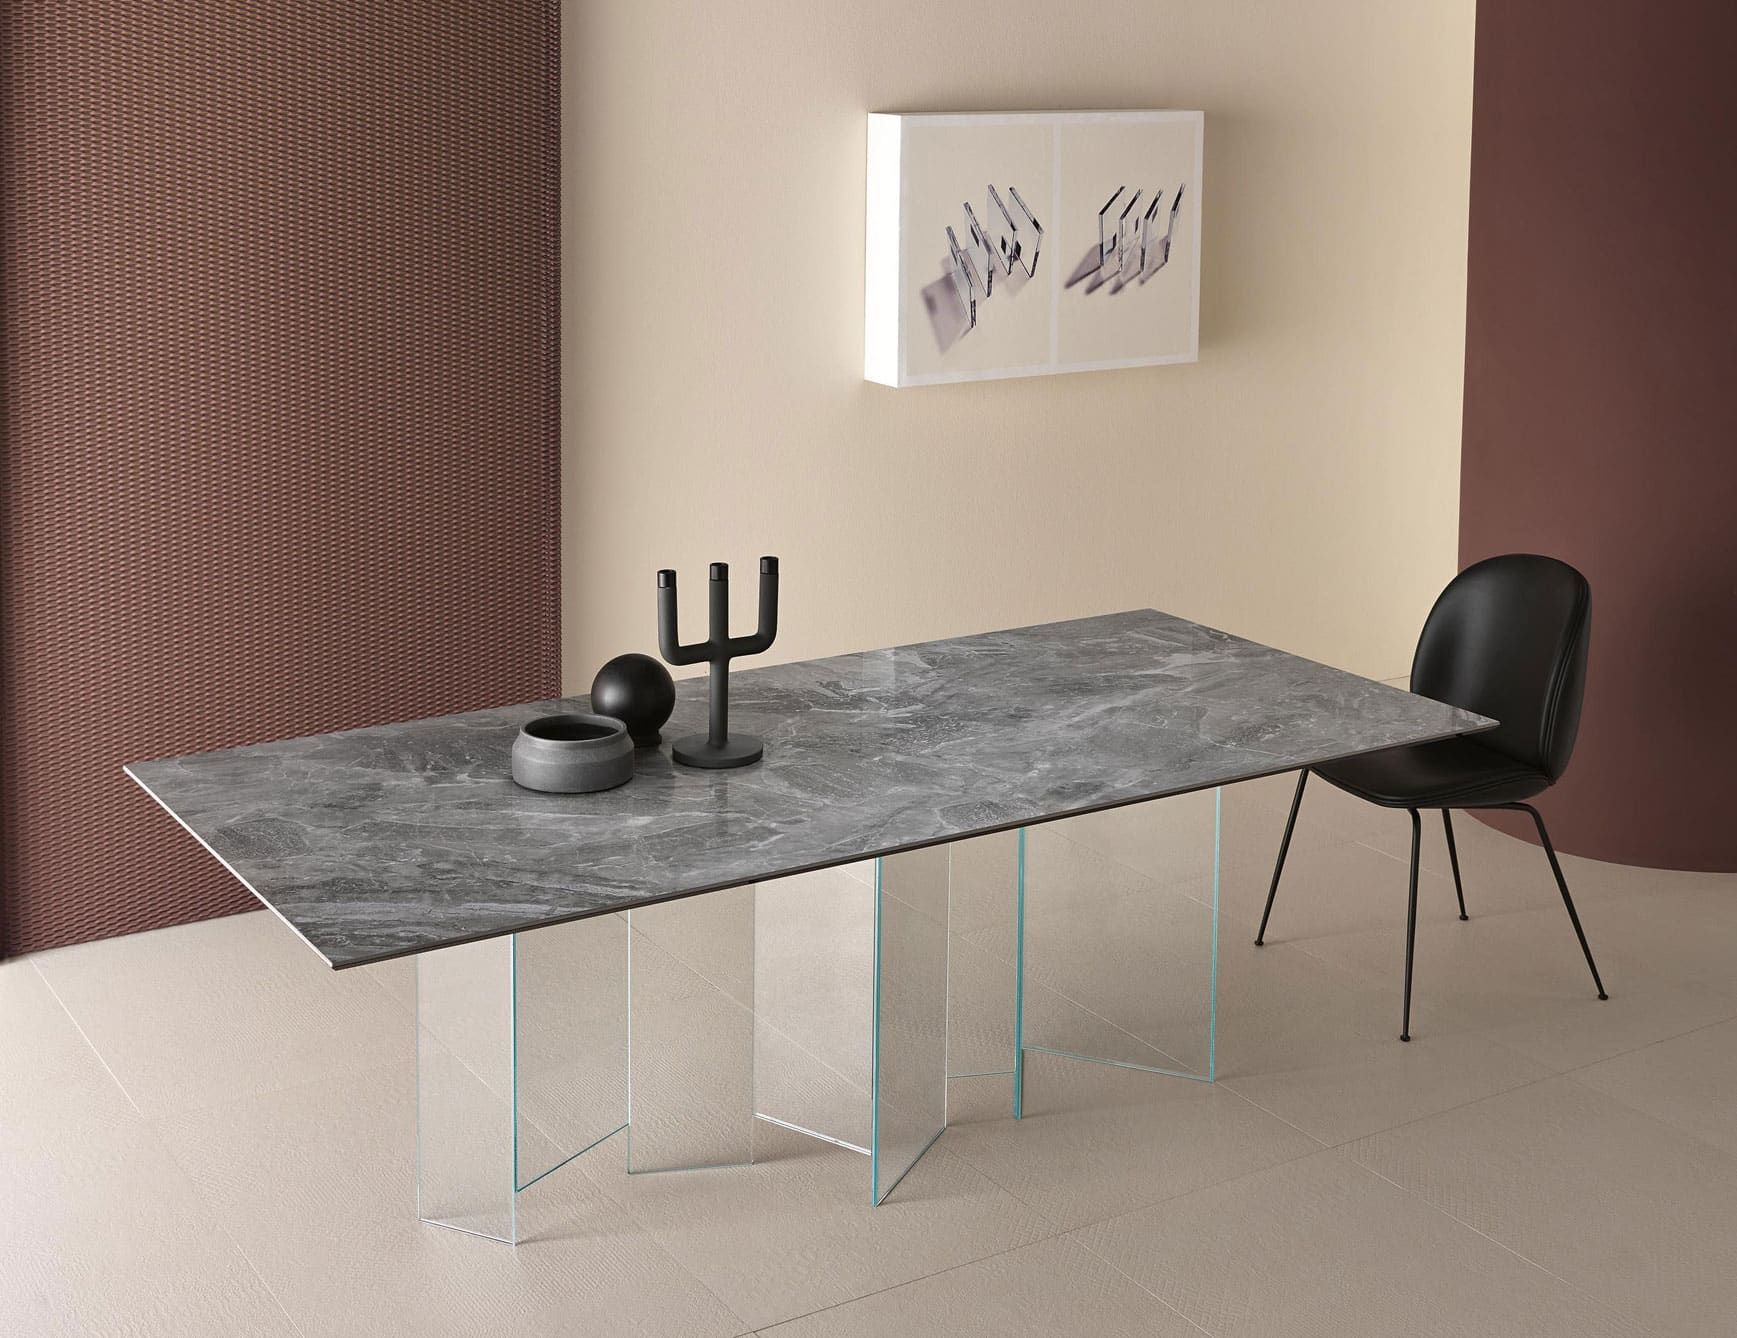 Metropolis contemporary Italian table with grey ceramic